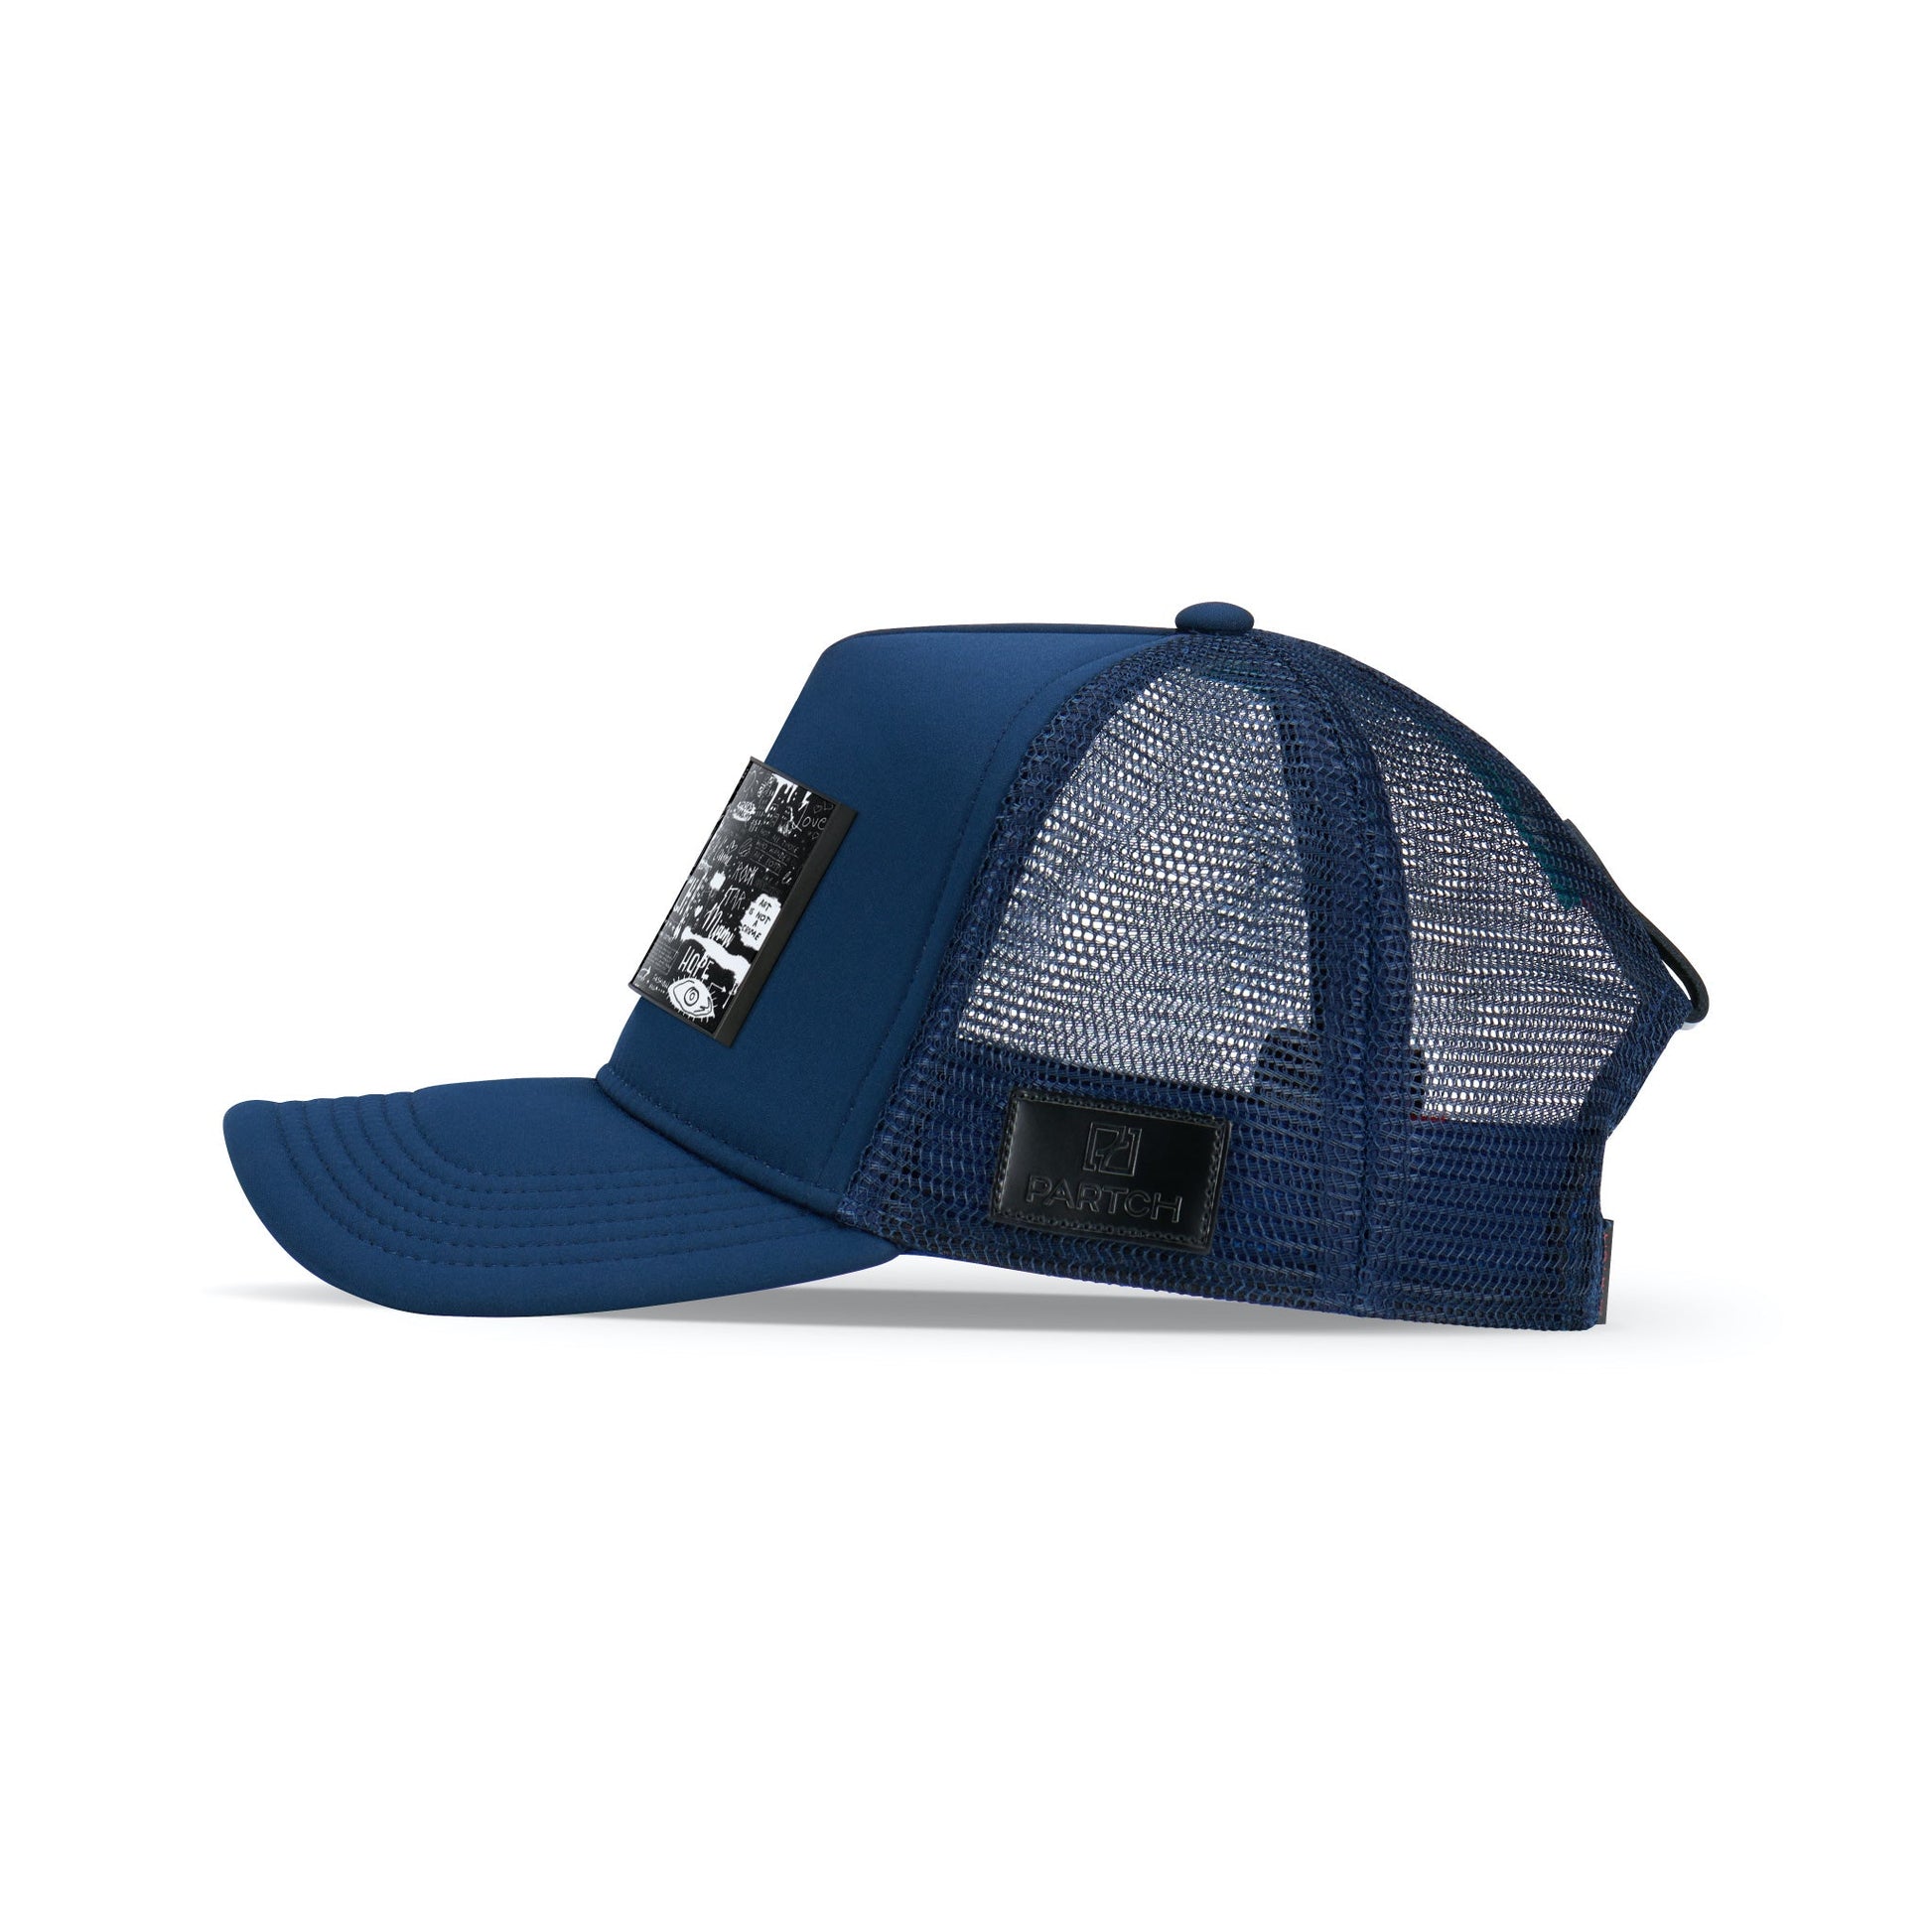 Partch Trucker Hat Navy Blue with PARTCH-Clip Pop Love Side View